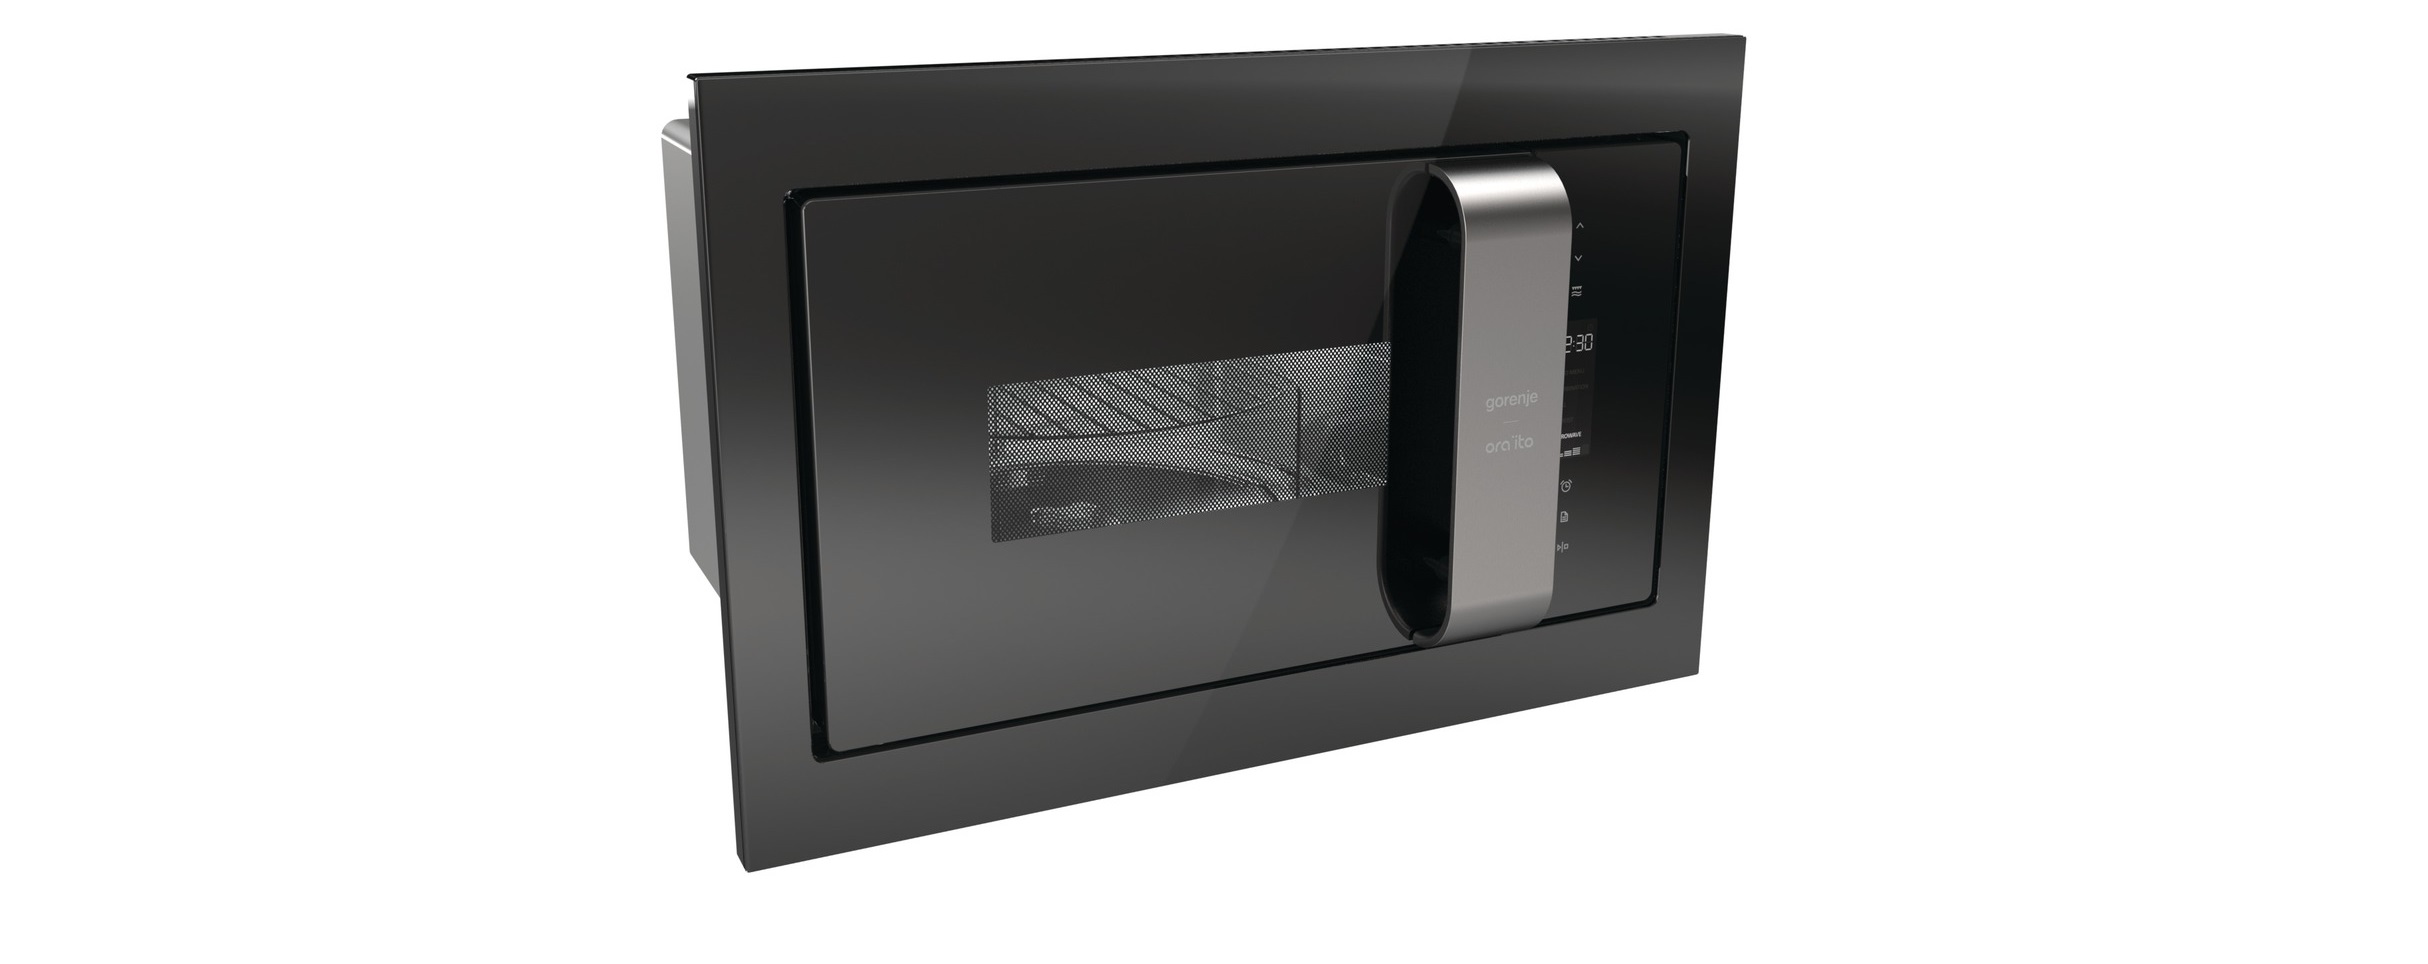 Gorenje Built-In Electric cm, Liters, Digital With BM235ORAB Grill, 60 Black 23 Microwave 